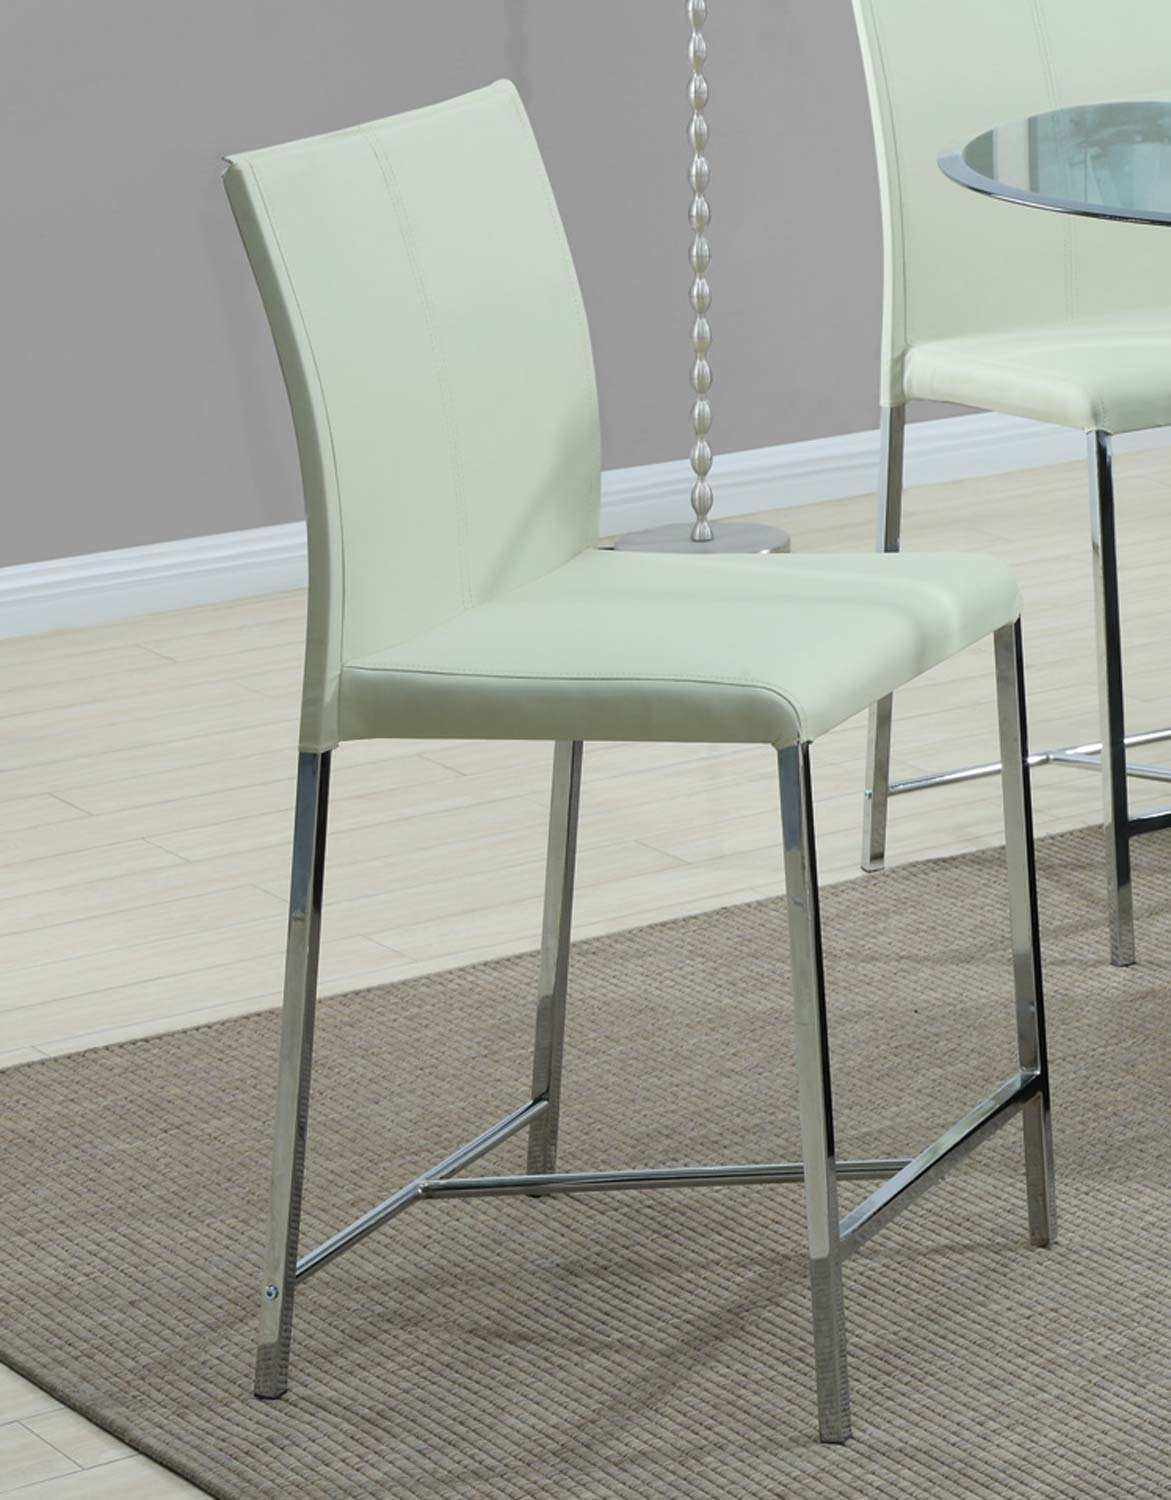 Coaster 103736 Counter Height Chair - Cream